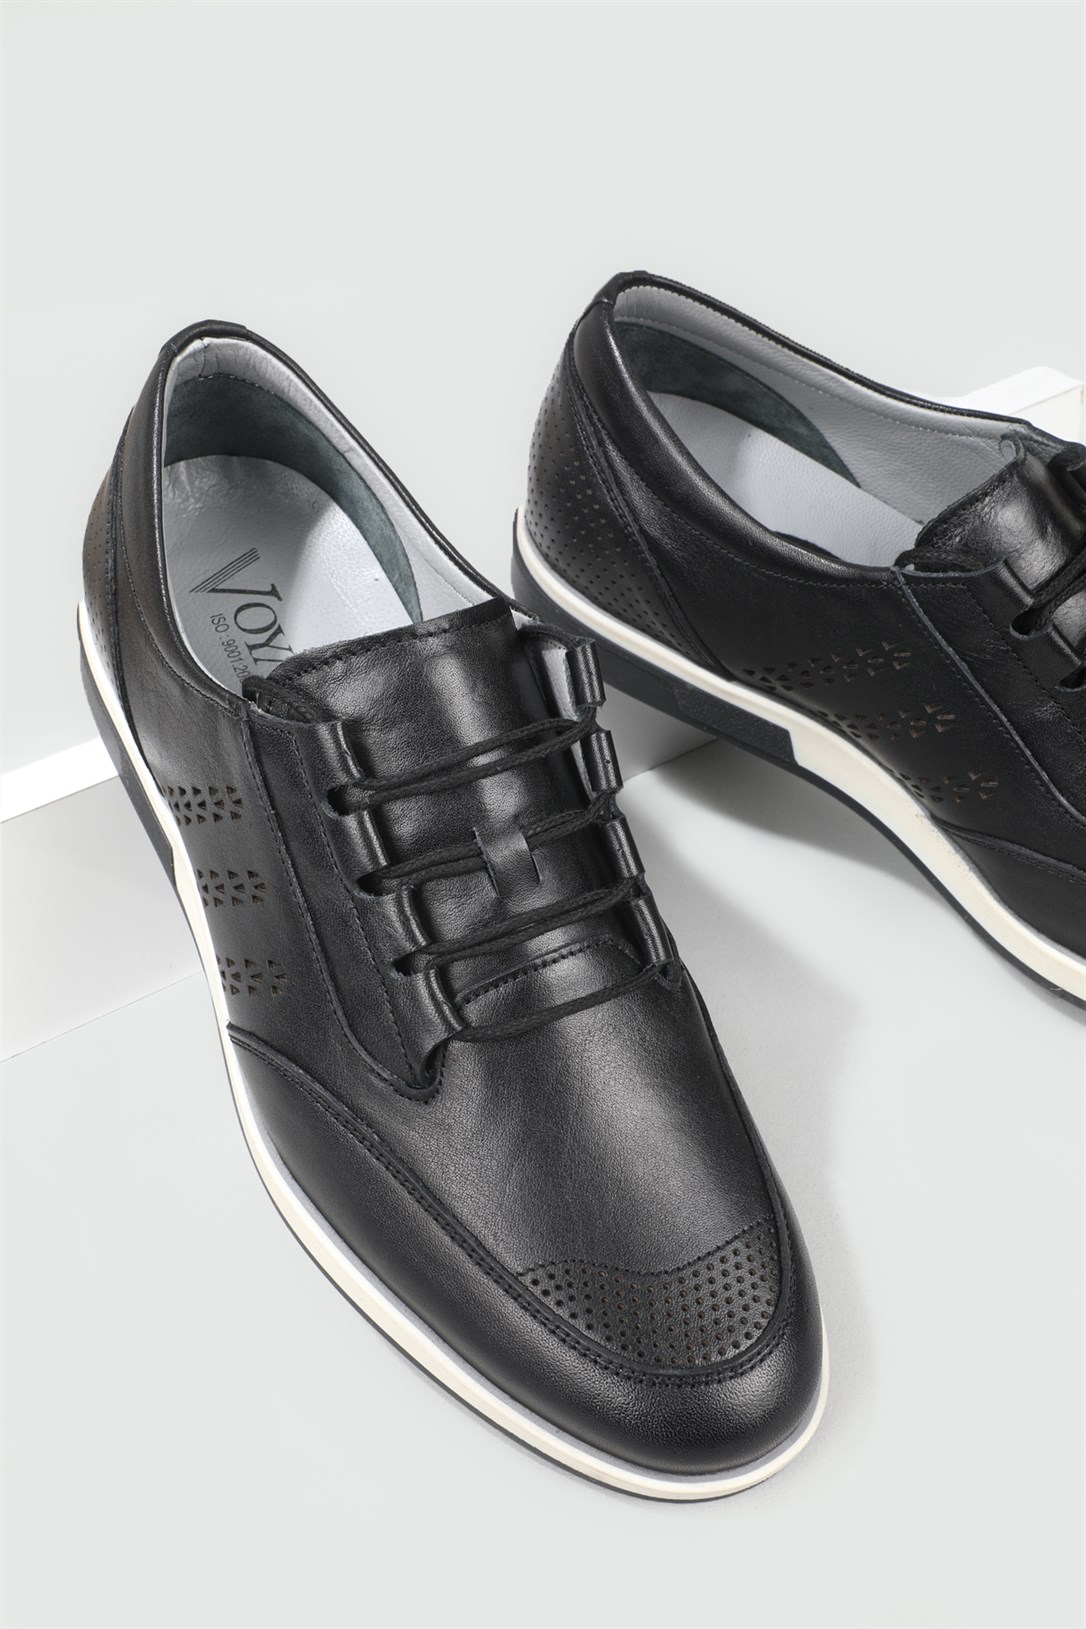 Voyager Deri Klasik Rahat Siyah Antik Erkek Ayakkabı 5663 | Ayakkabı City